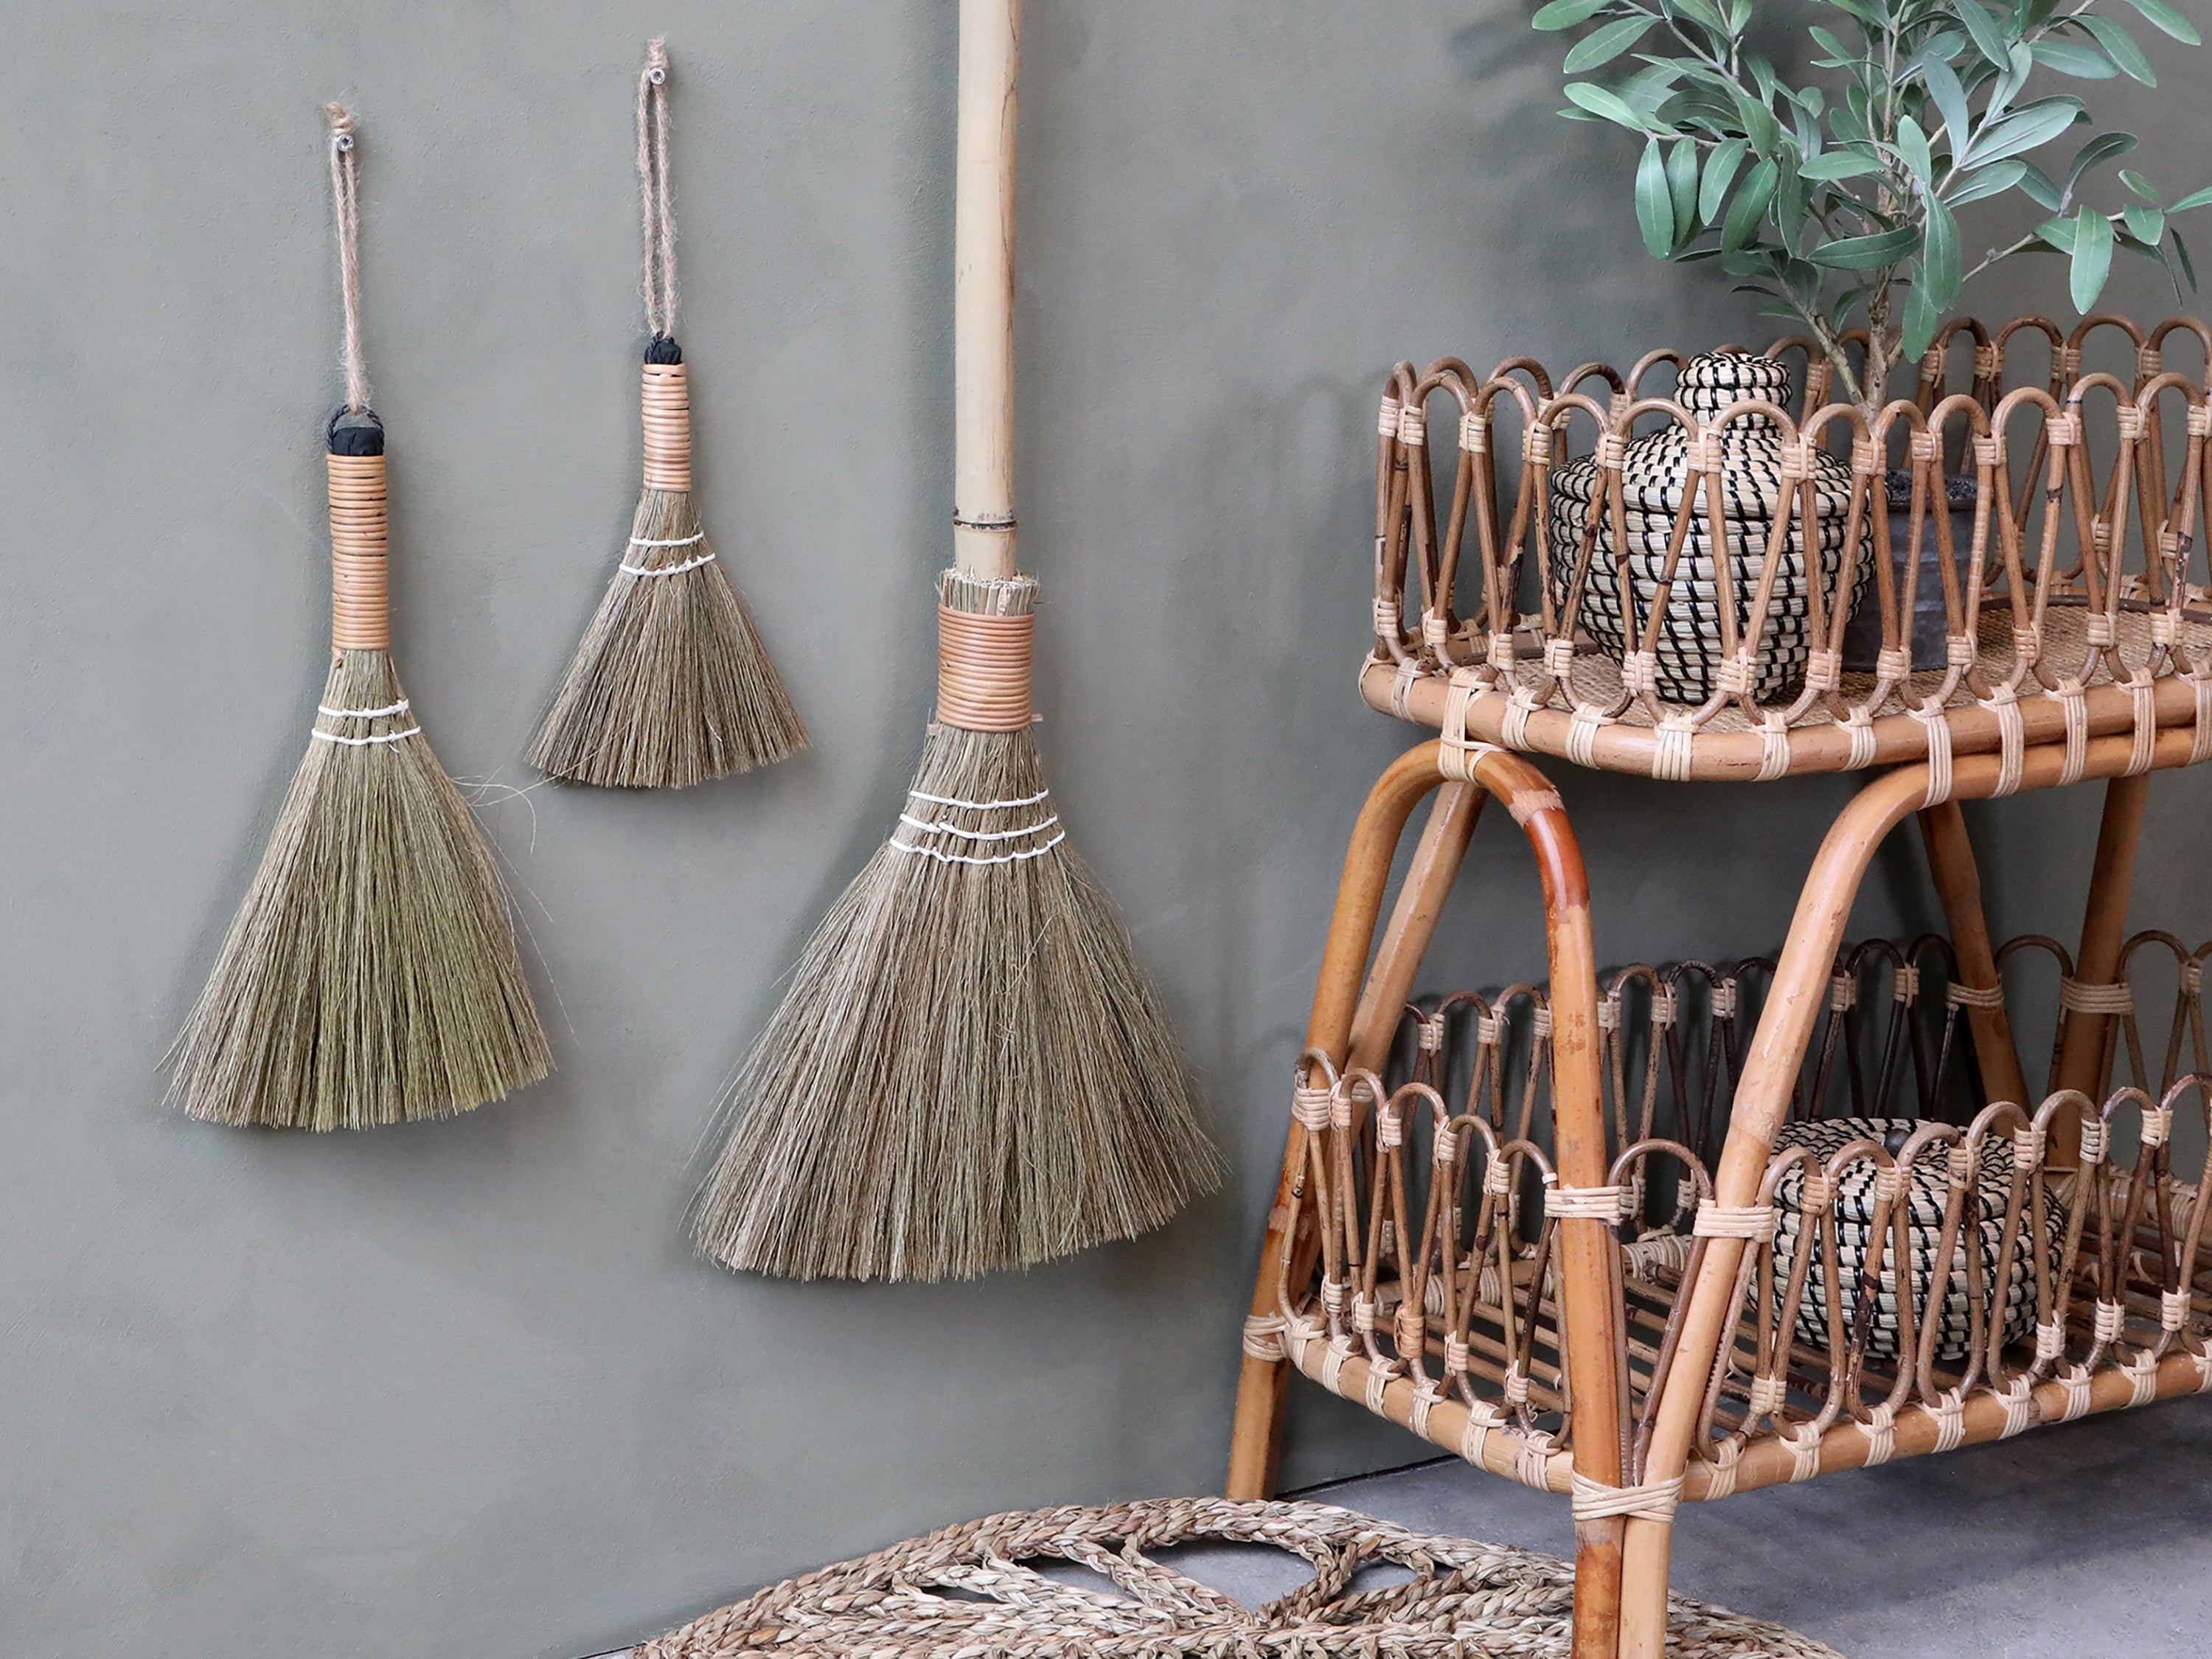 Small Sweeping broom made of natural straw - Nature